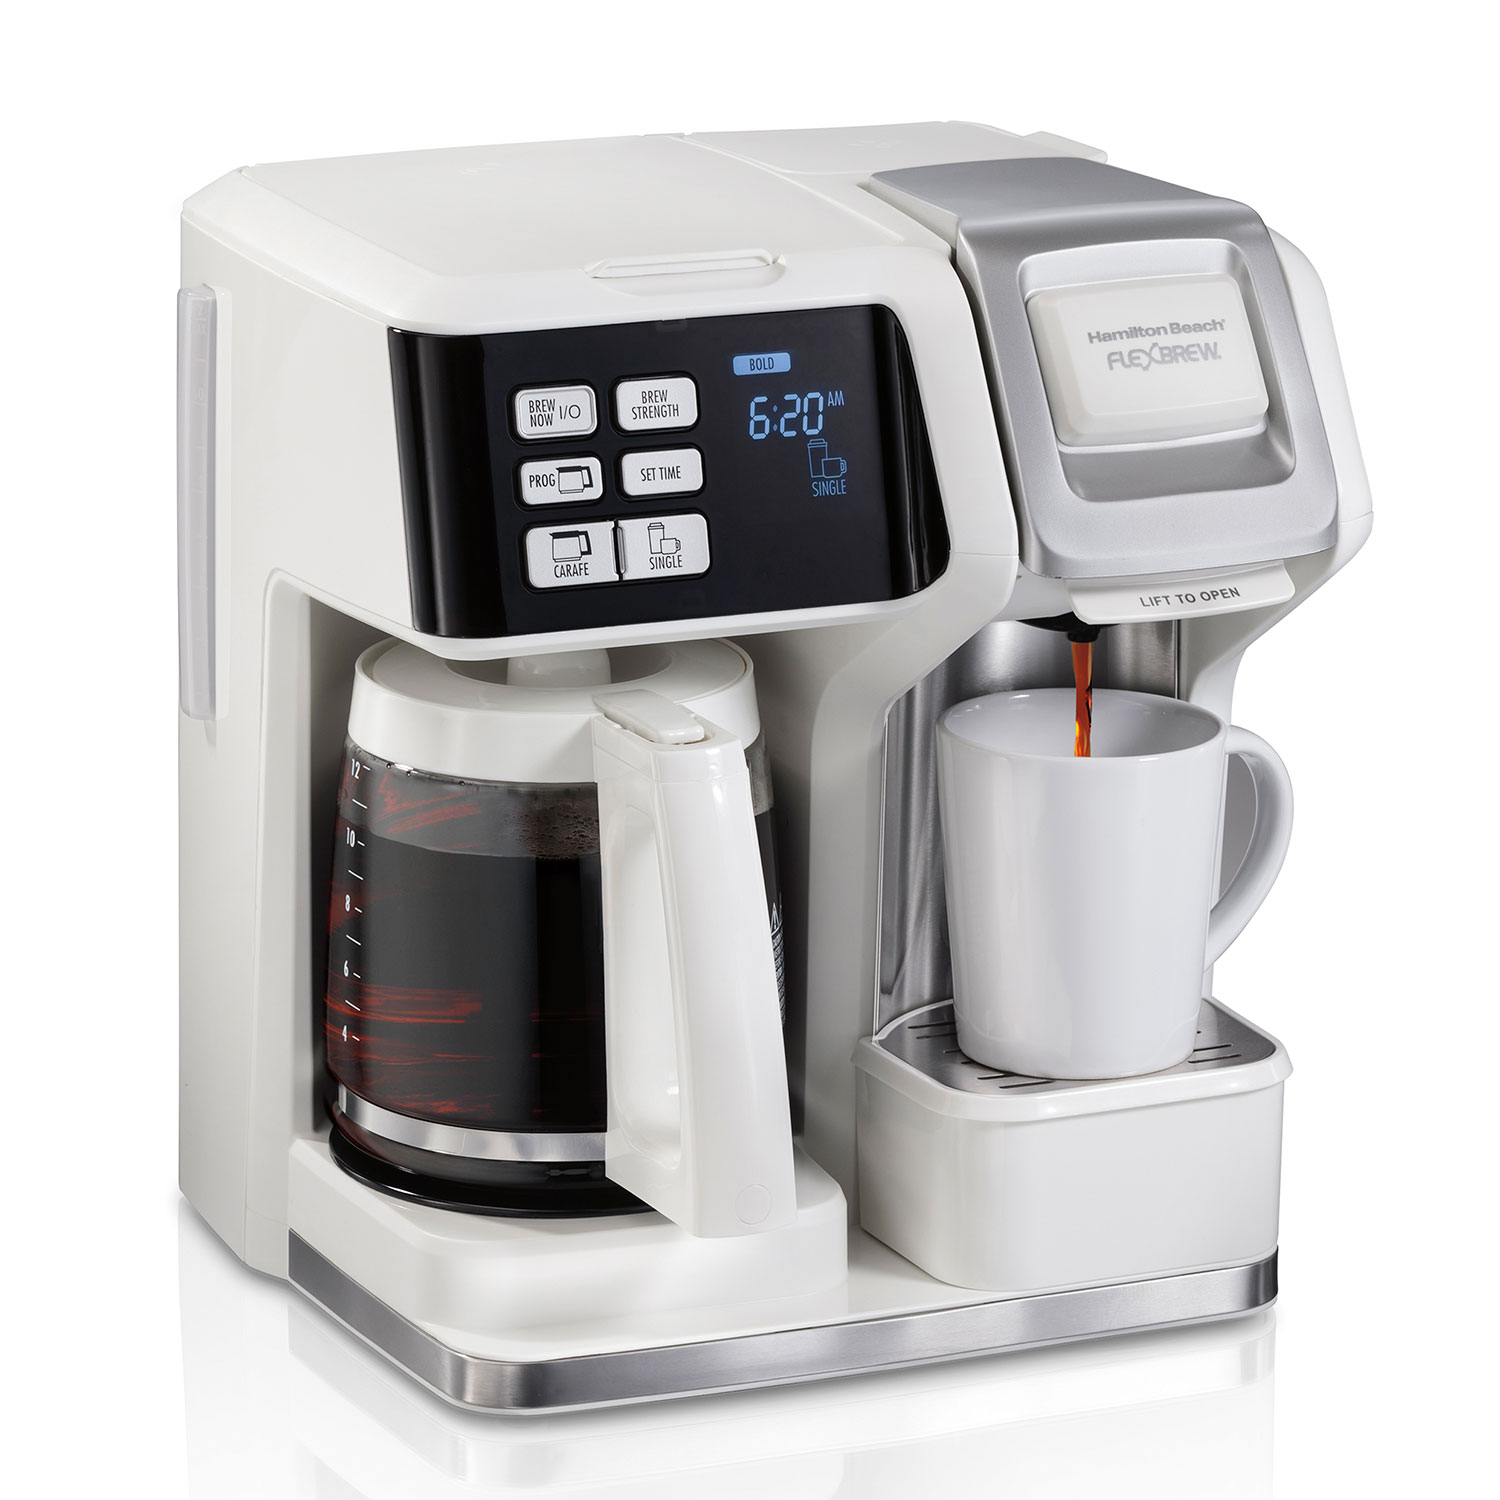 Purchase FlexBrew® 2-Way Coffee Maker now